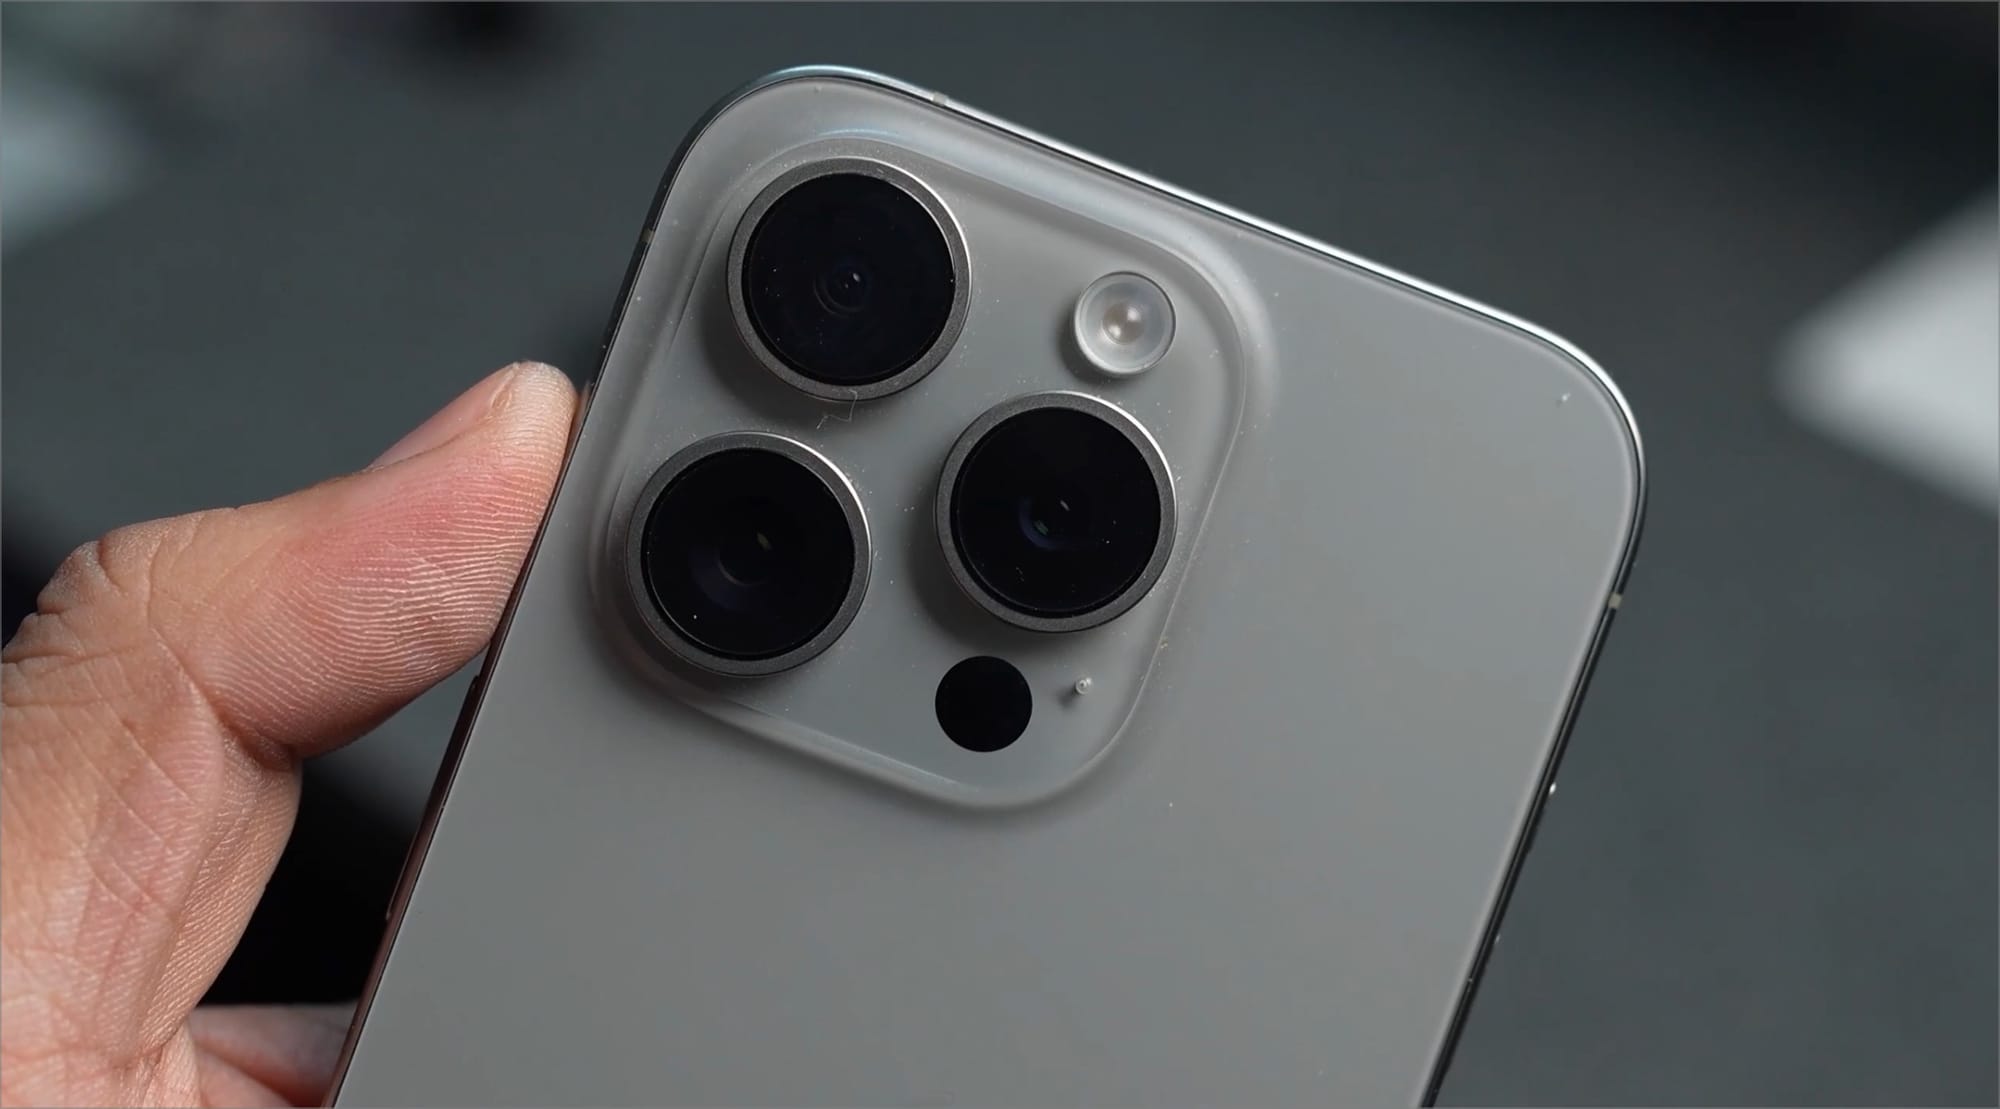 iPhone 15 Pro Camera Bump